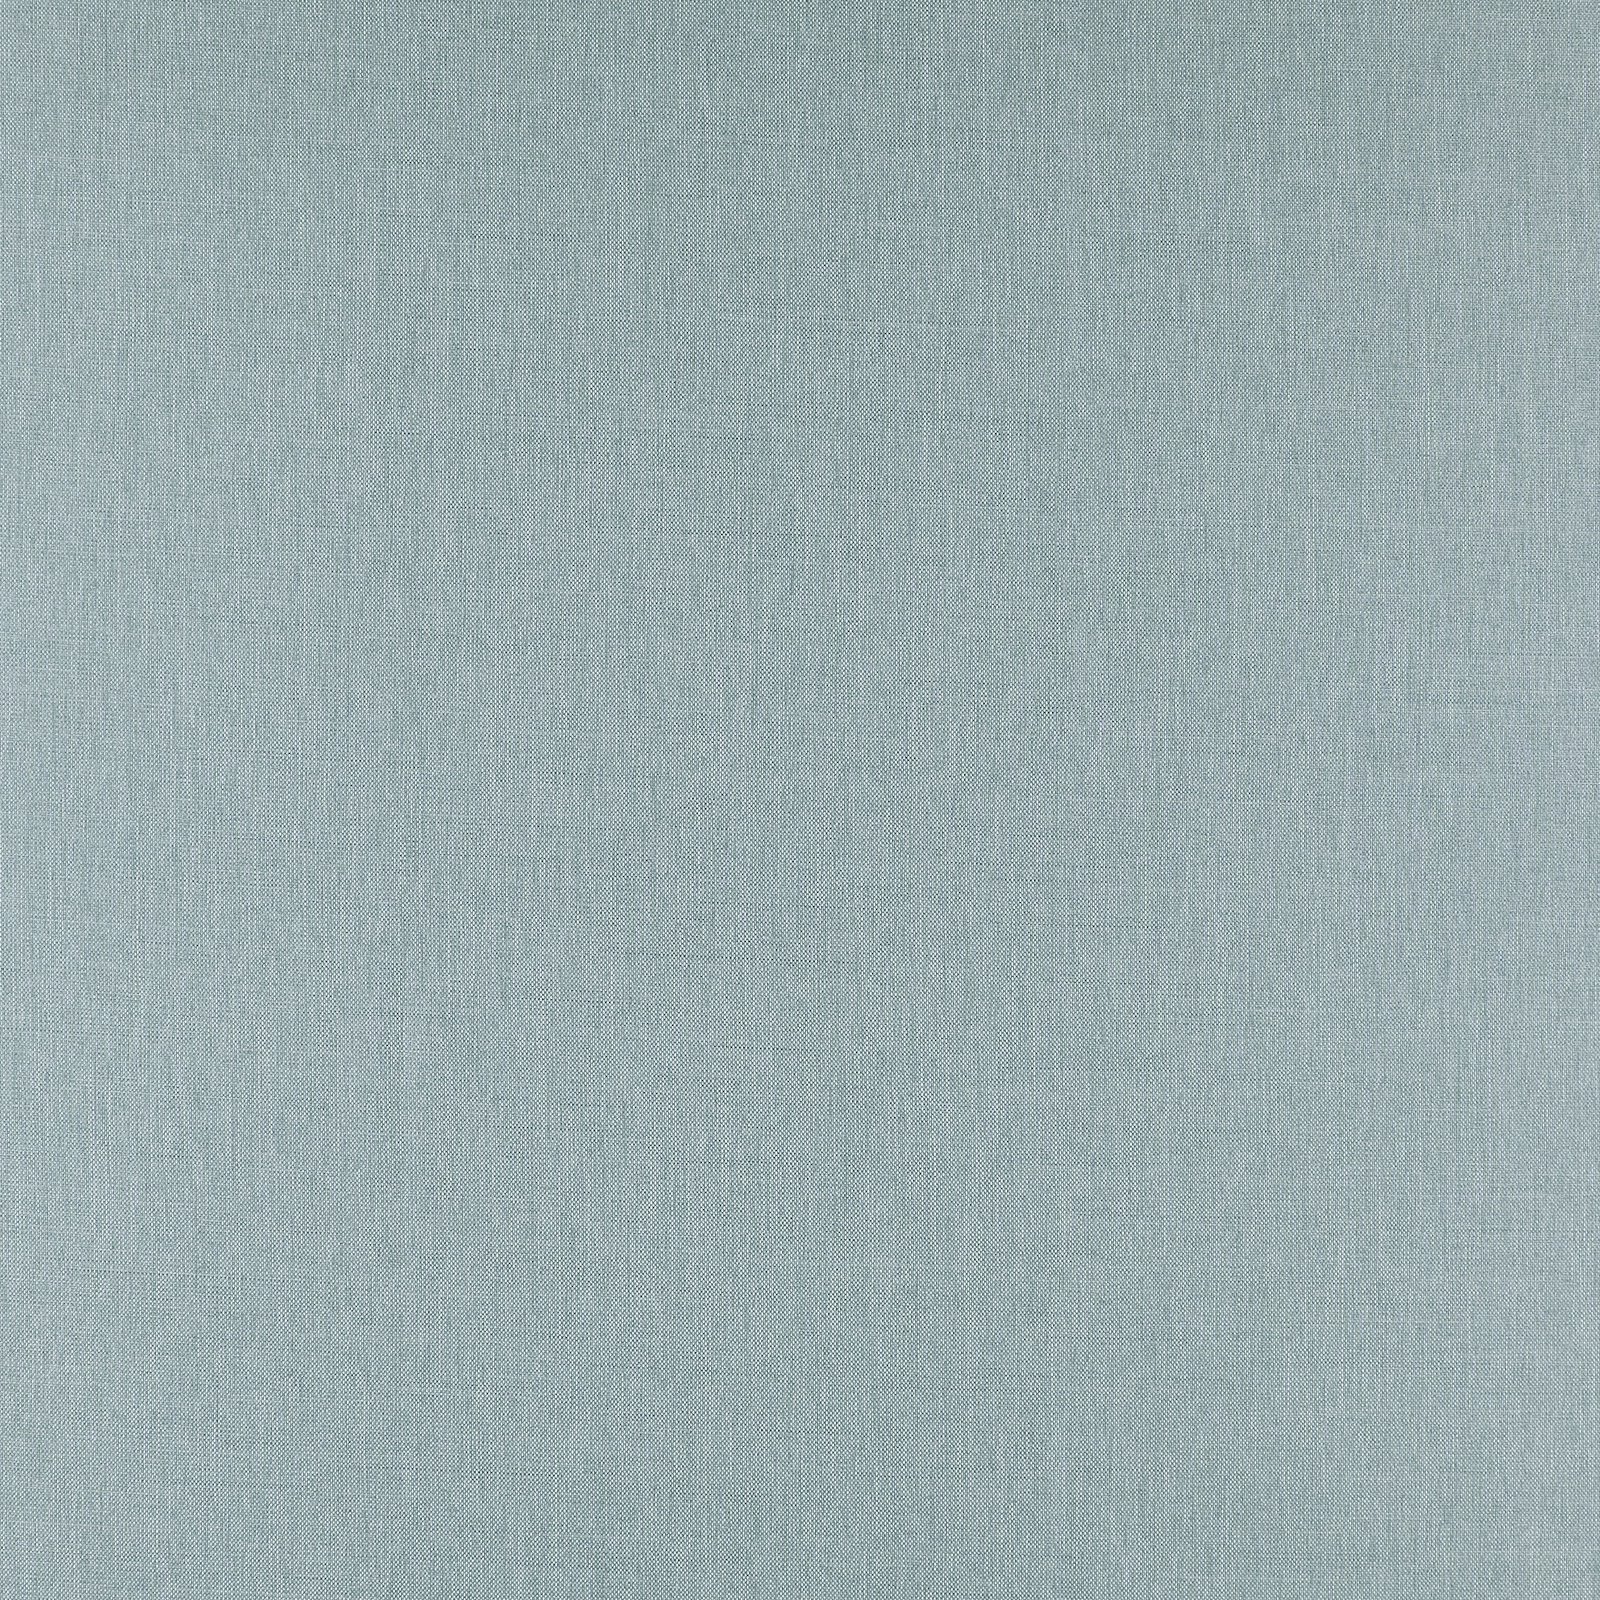 Upholstery fabric blue grey melange 826593_pack_solid